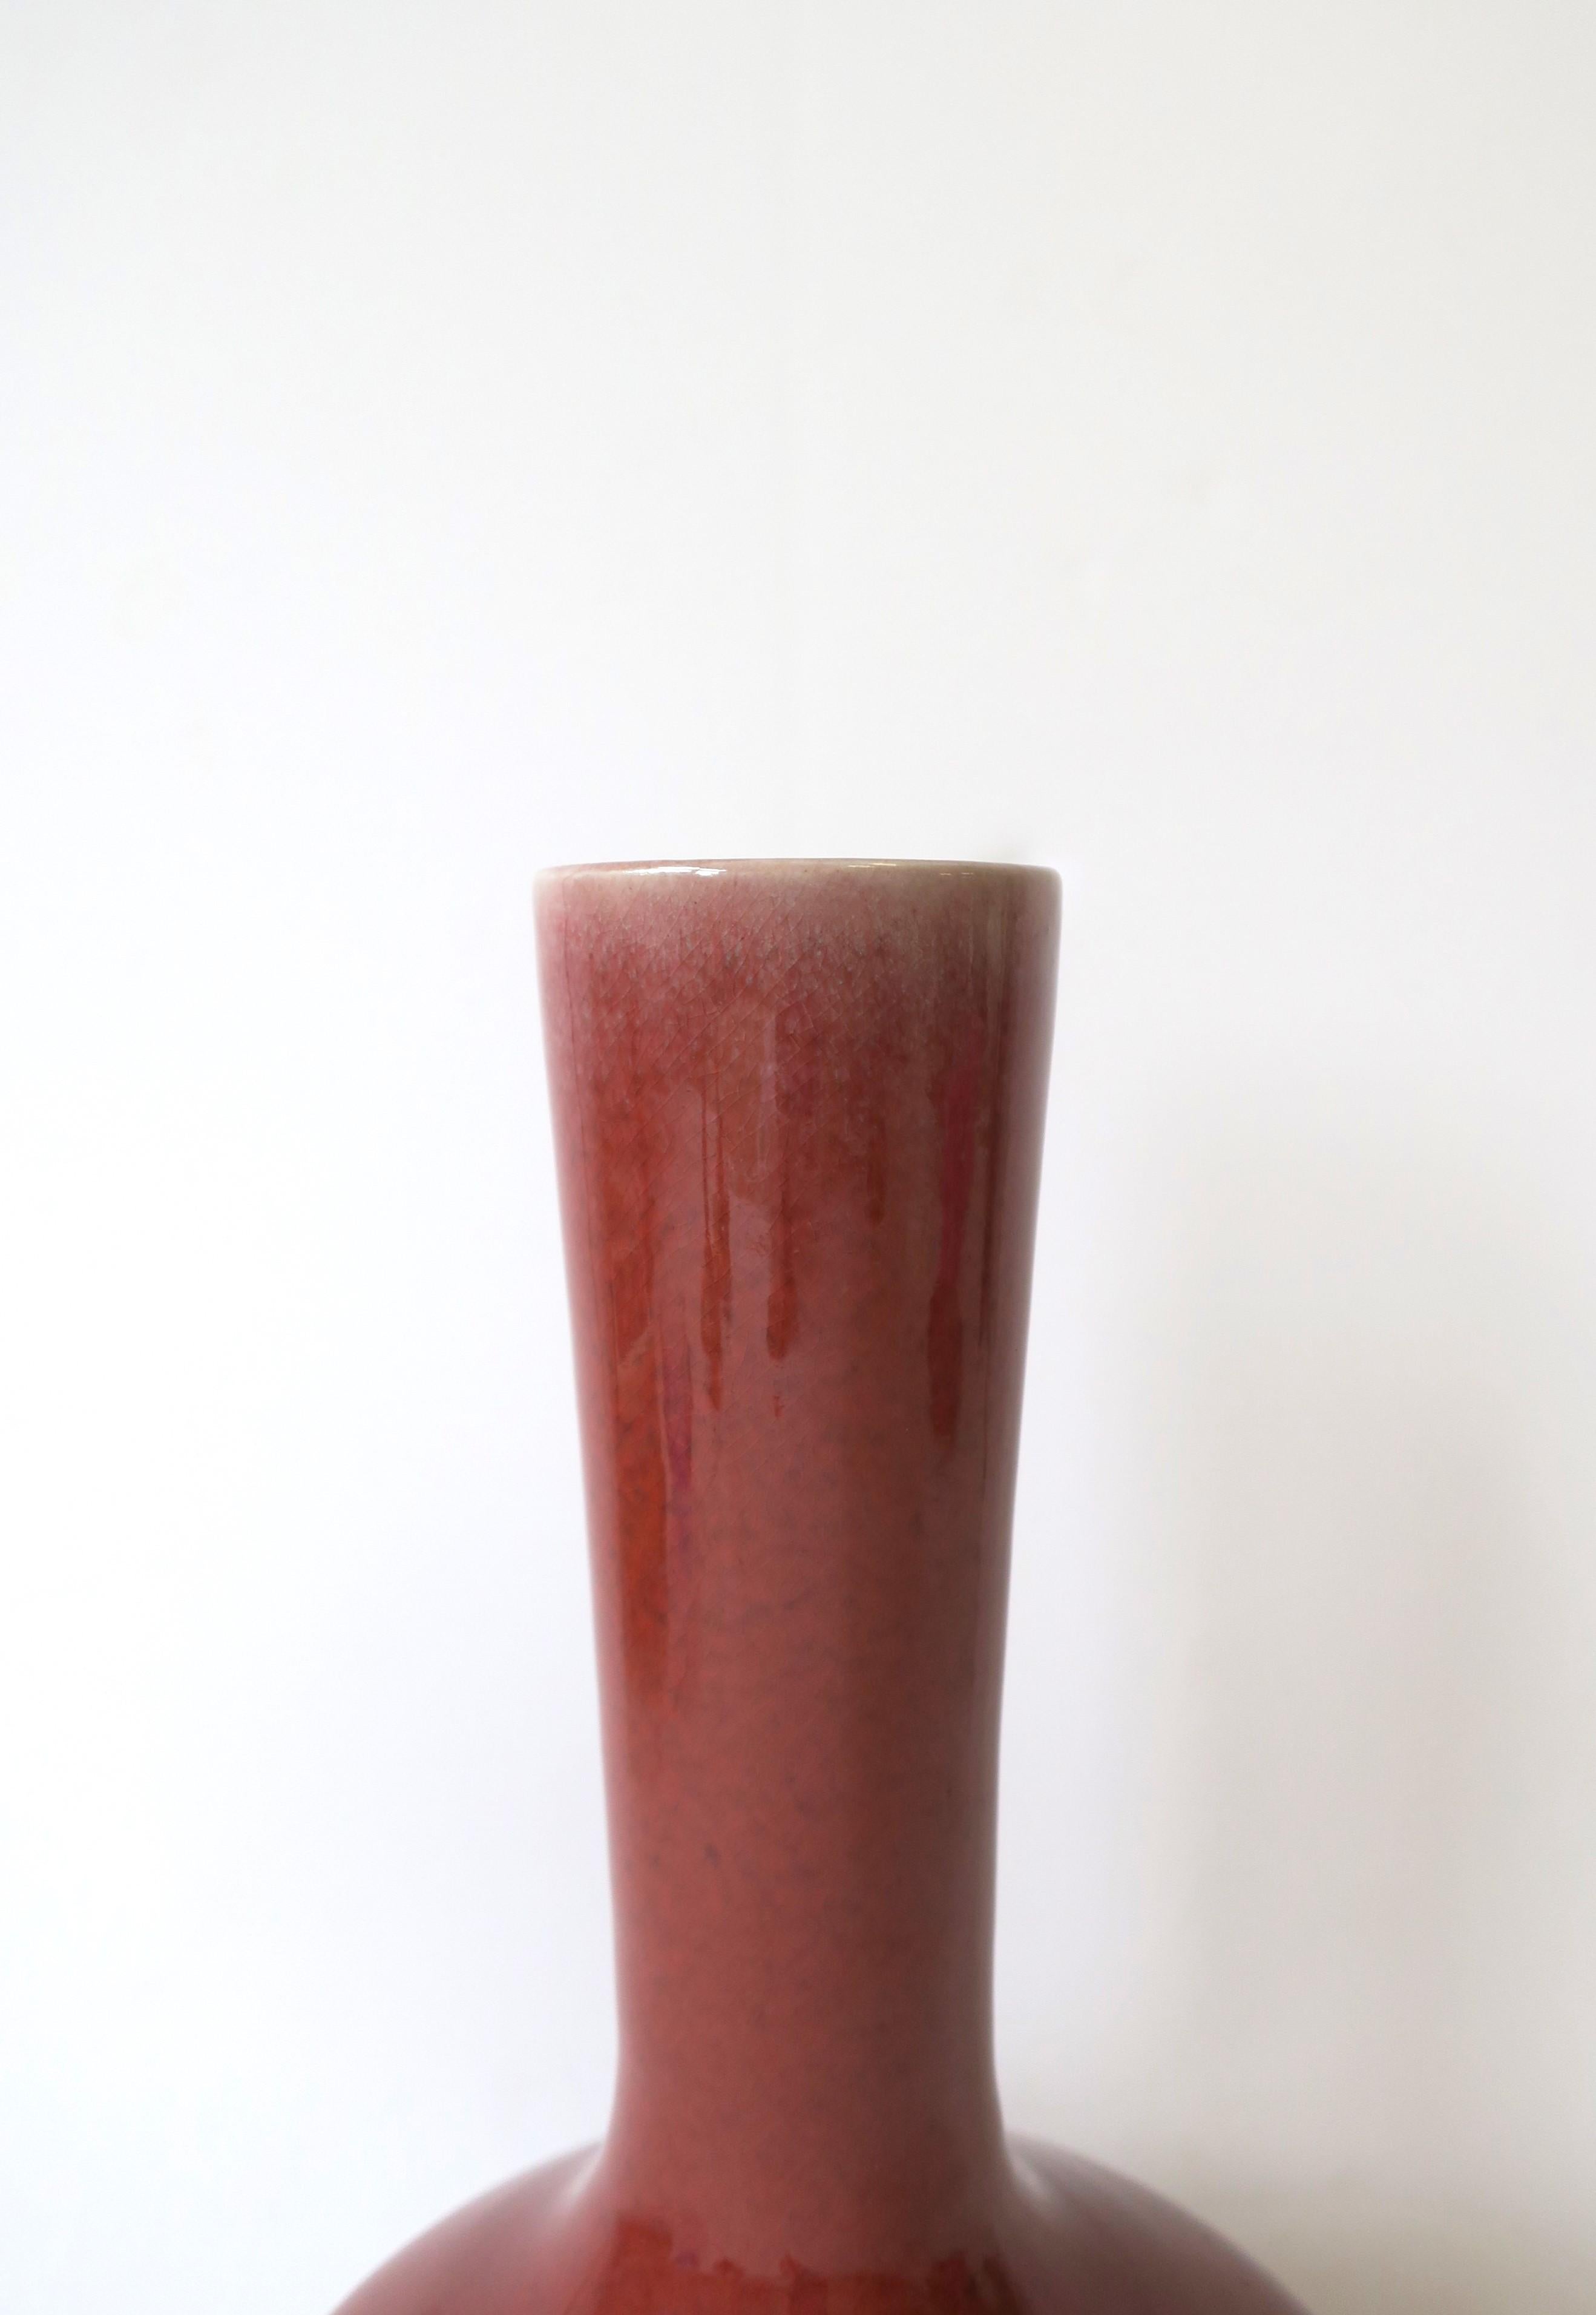 Red Burgundy Pottery Vase by Maitland-Smith 1